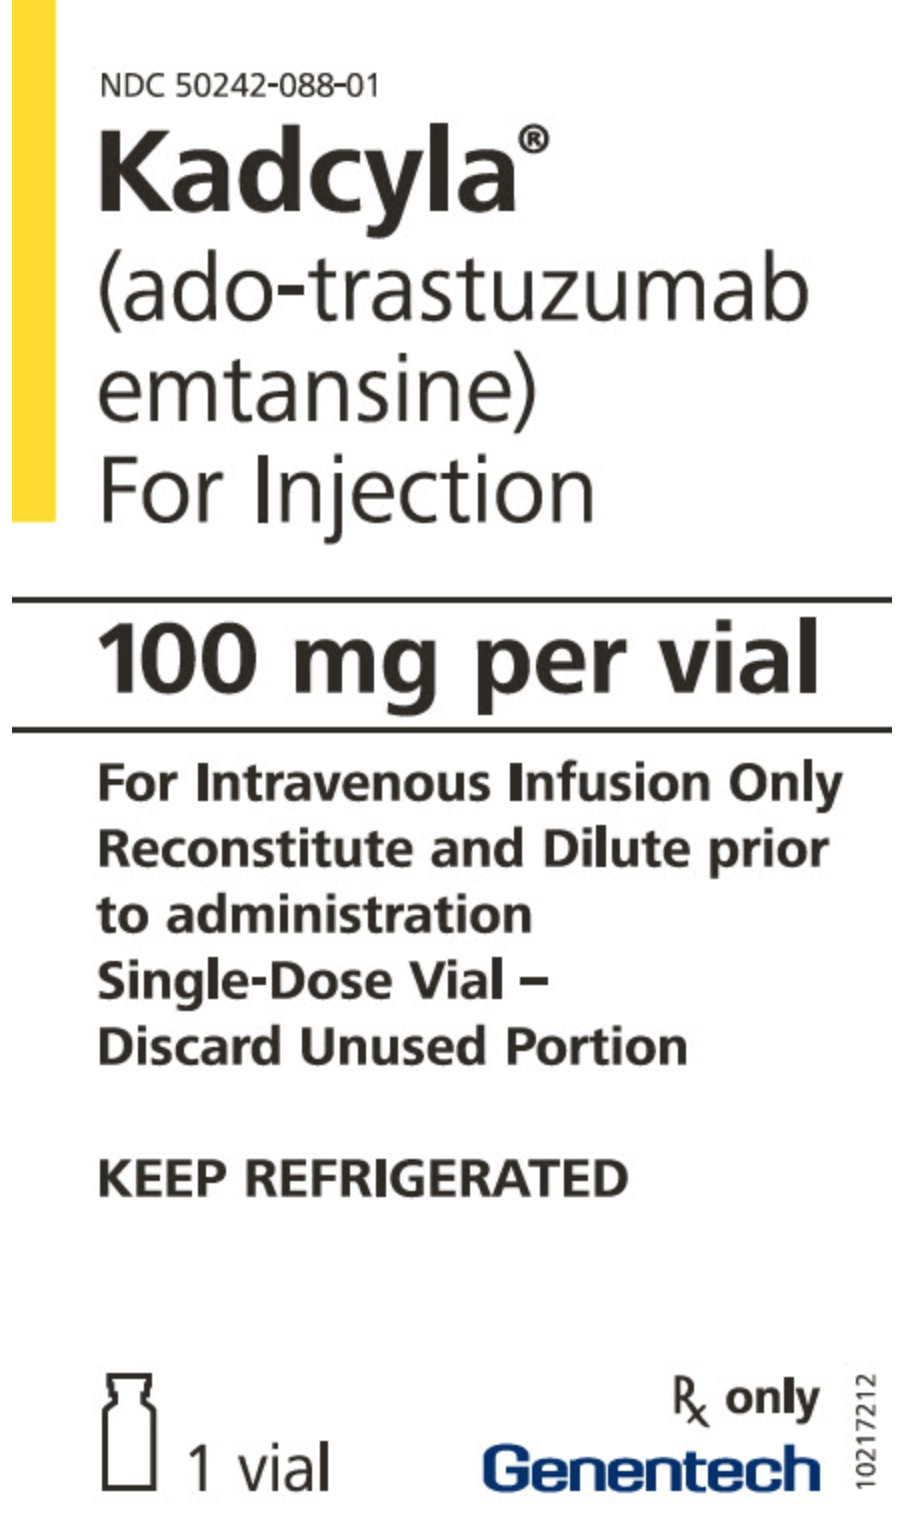 File:Ado-trastuzumab emtansine packaging.png